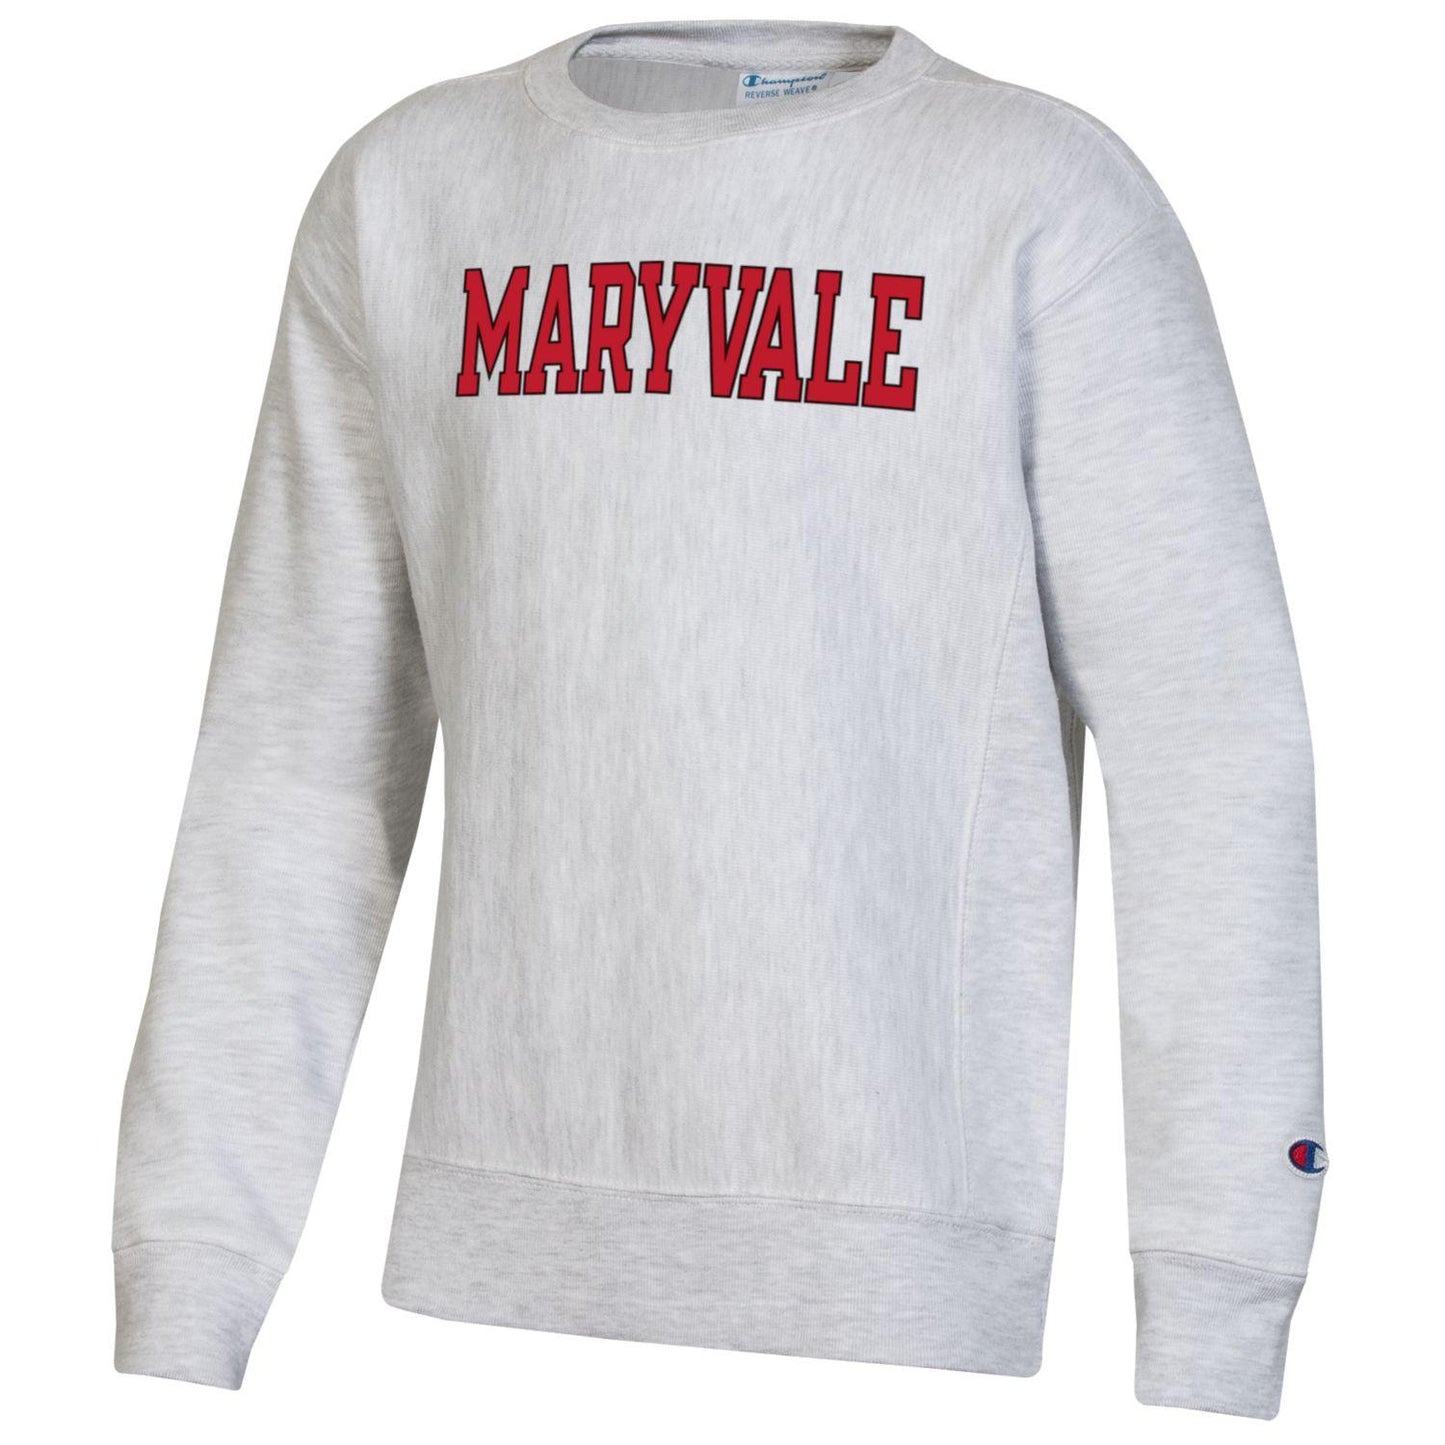 Maryvale Crew Sweatshirt- Silver Gray